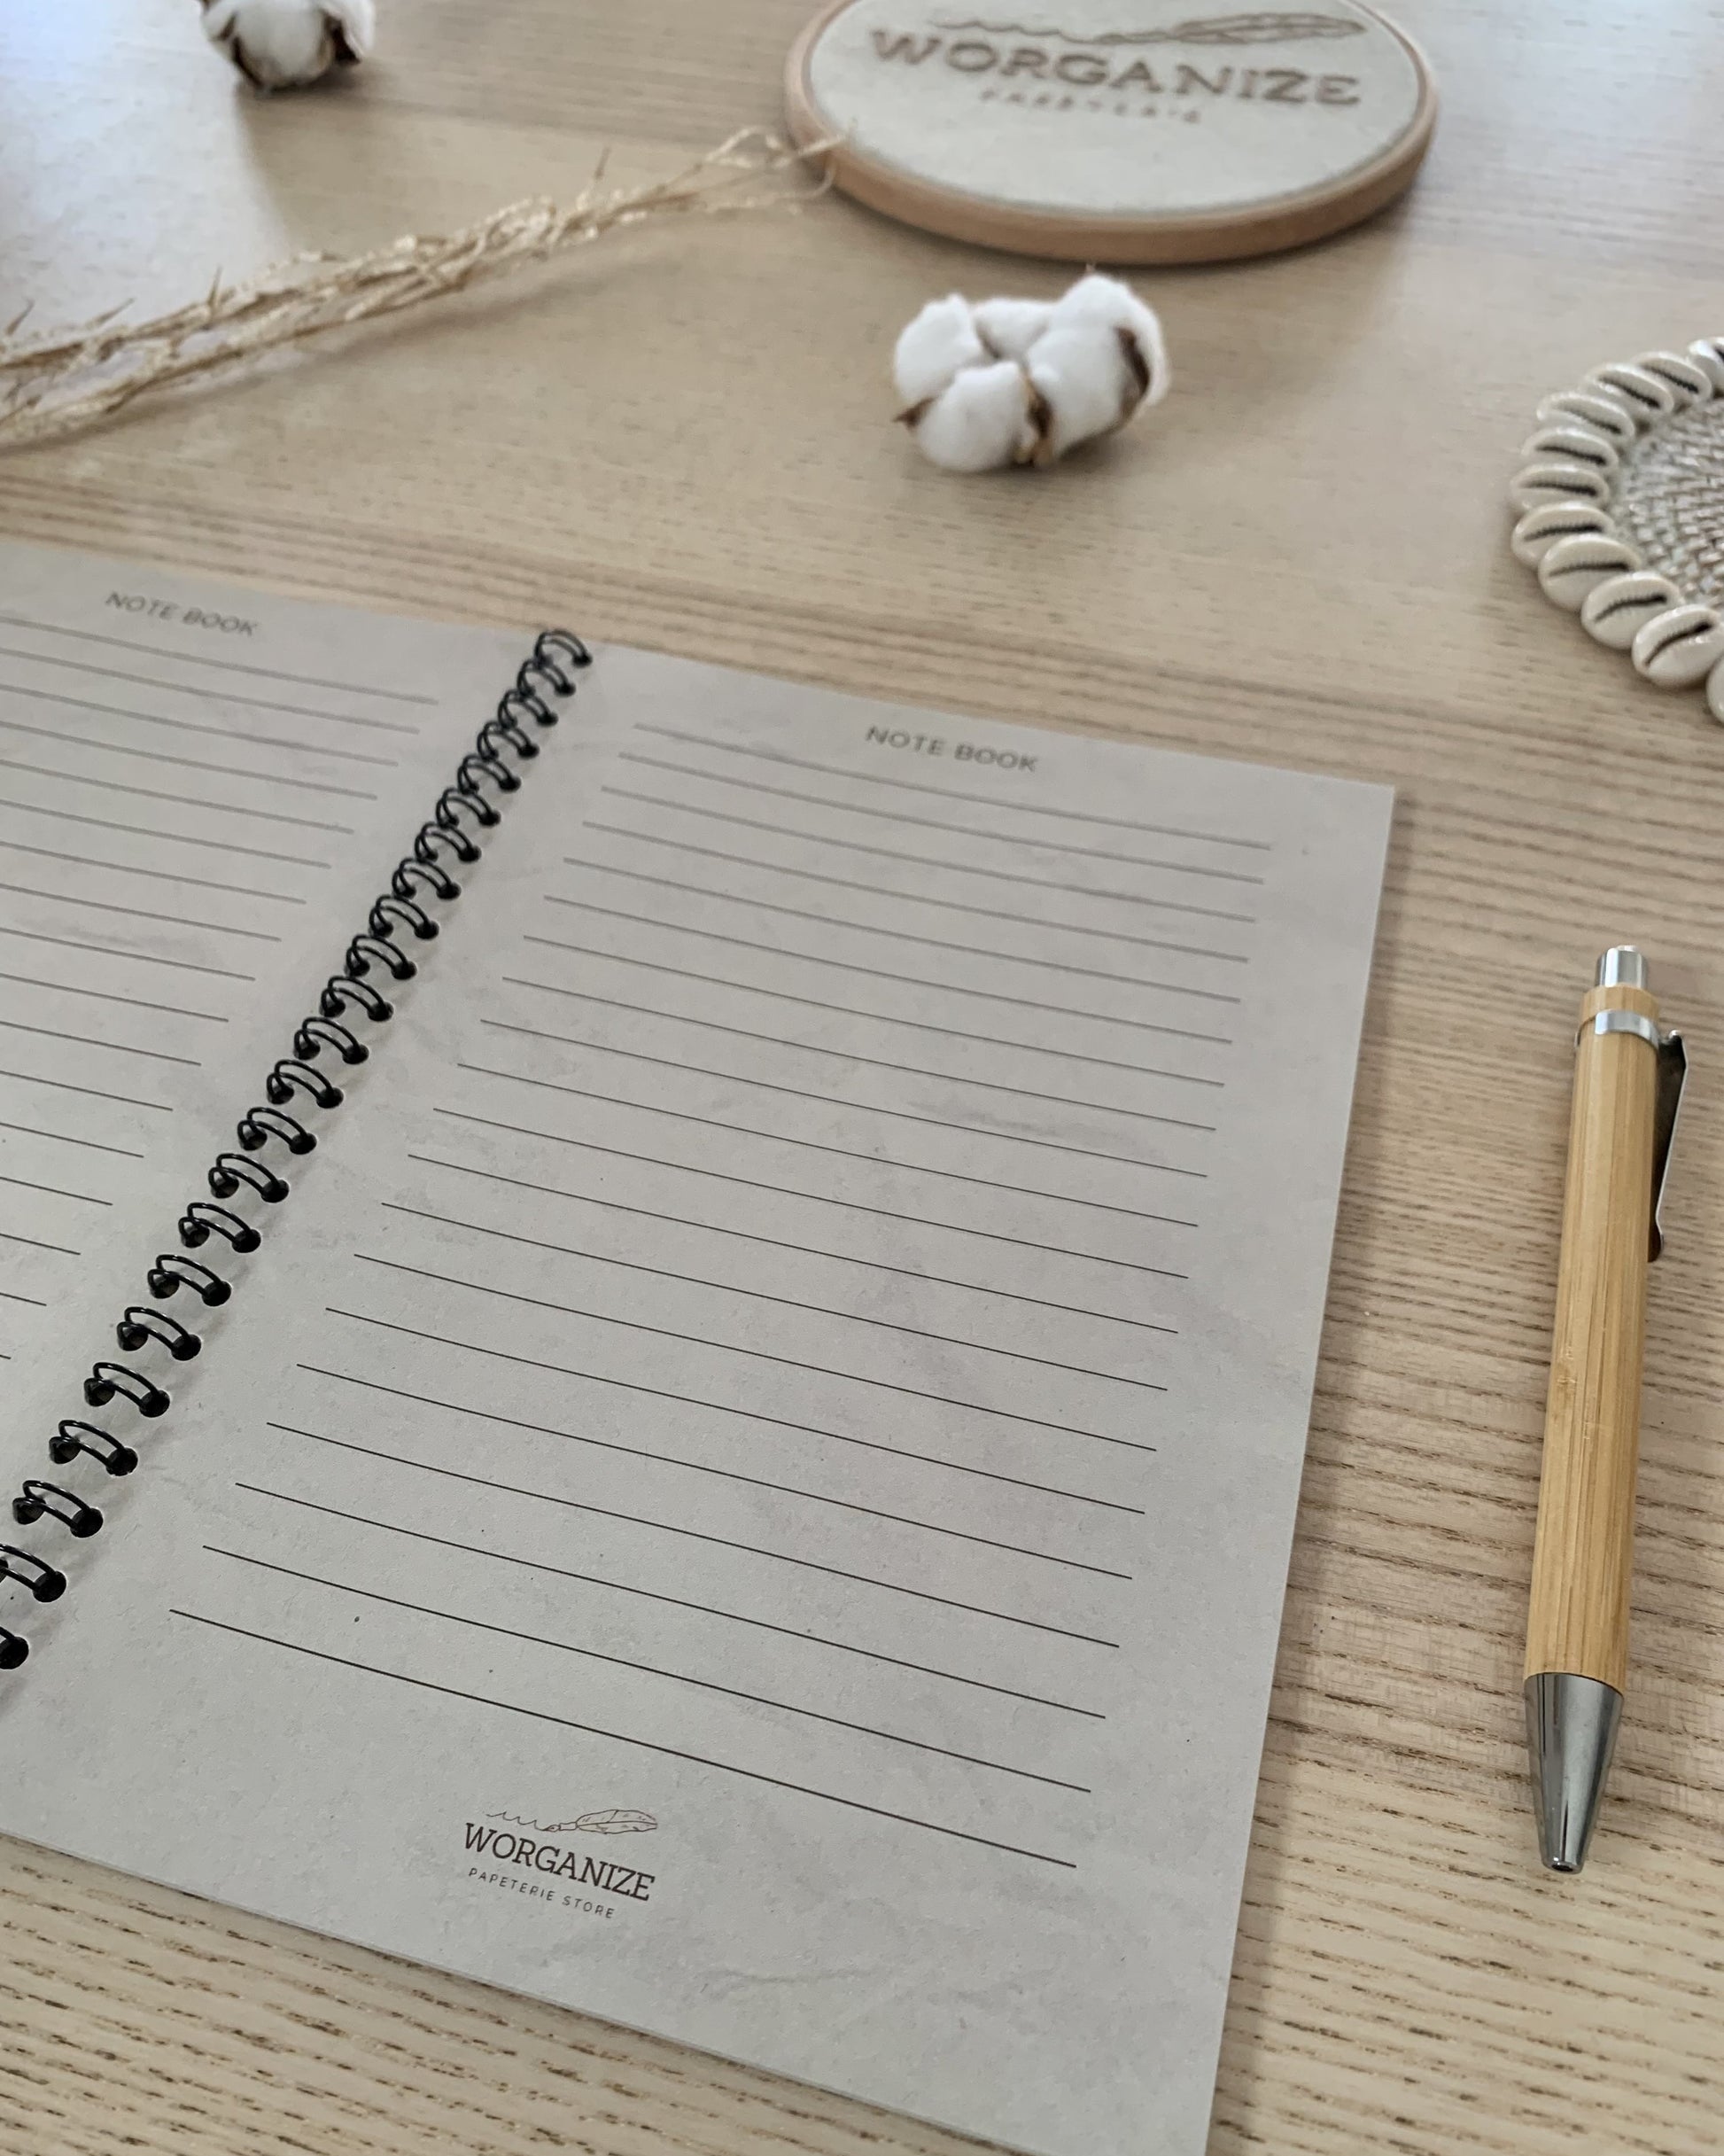 NoteBook - B2B de Worganize, la papeterie minimaliste d'organisation